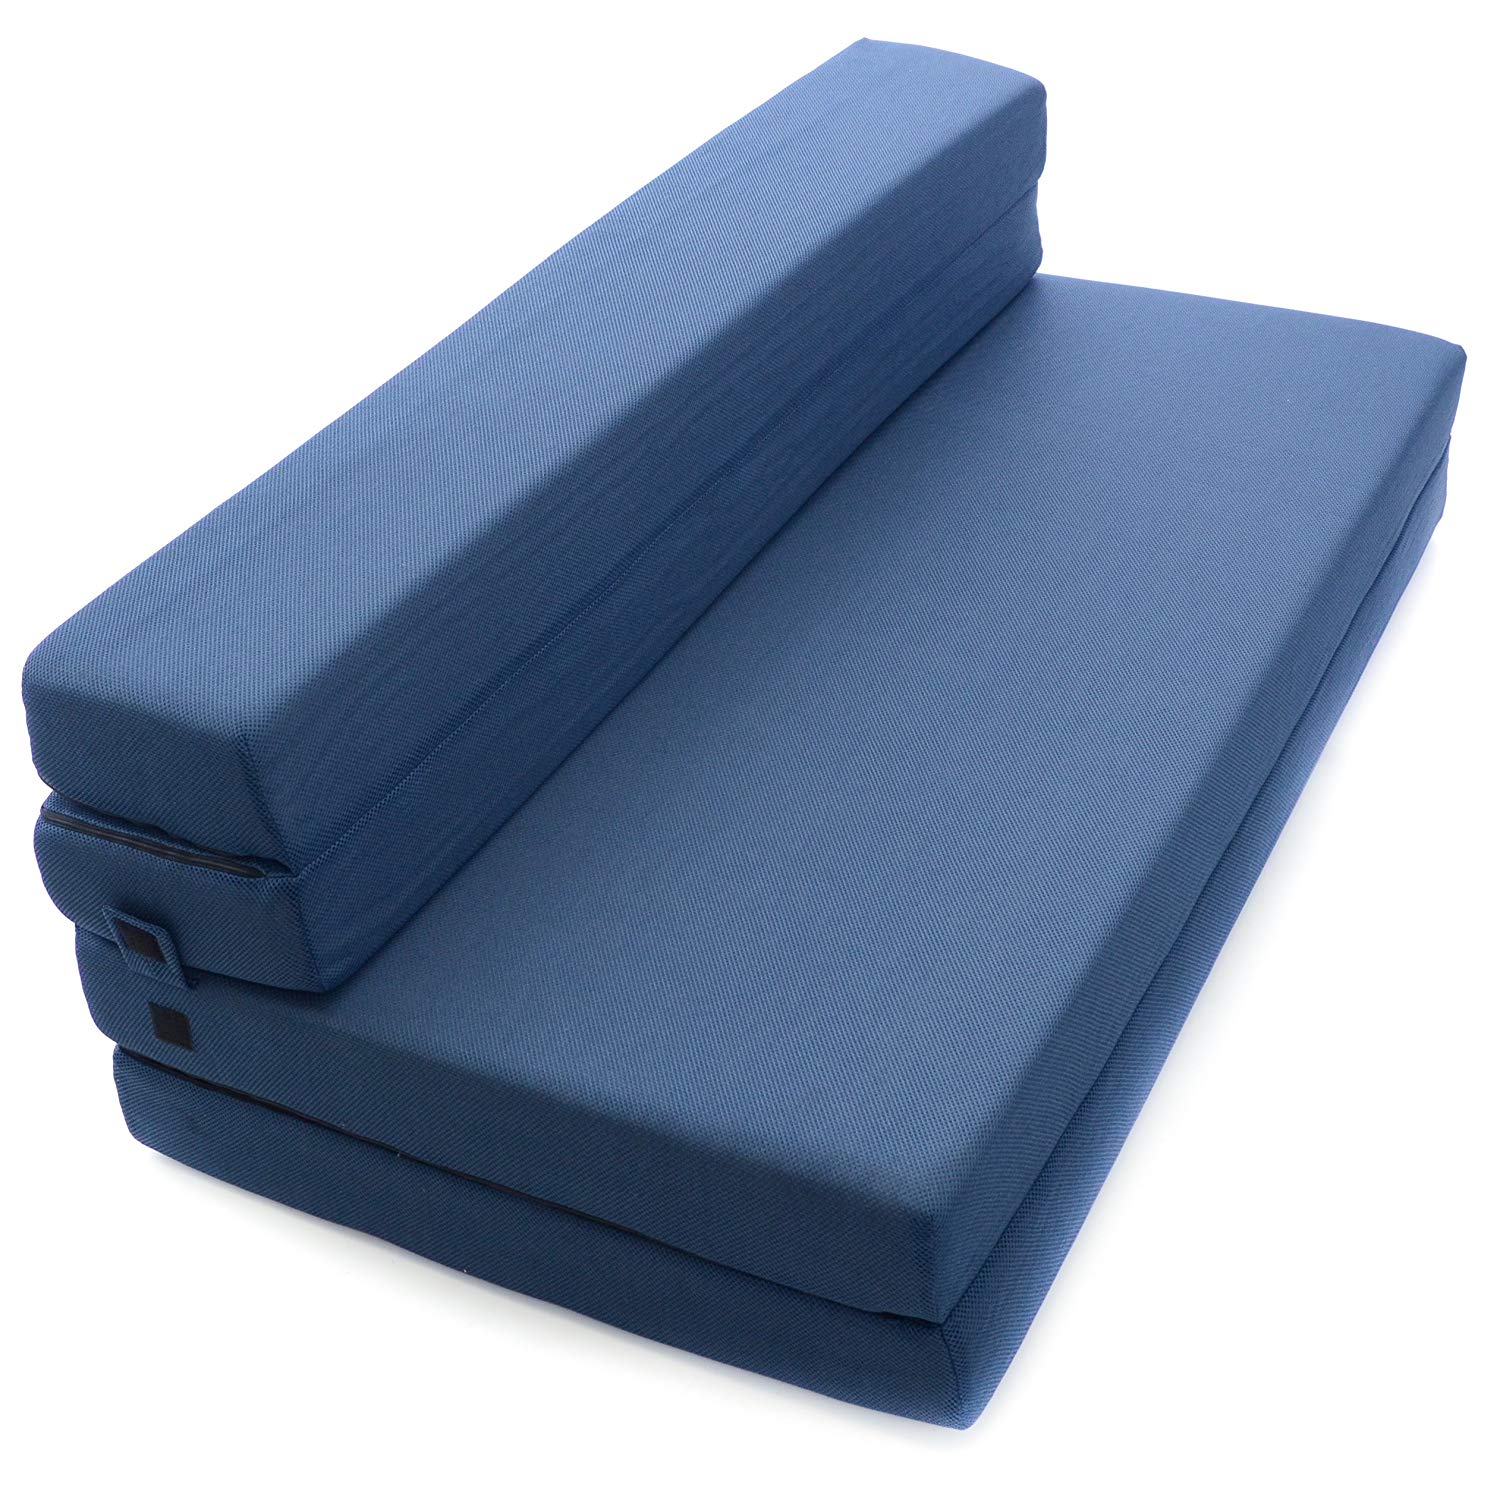 Foam sofa bed amazon.com: milliard tri-fold foam folding mattress and sofa bed for guests  - WFJNCDV